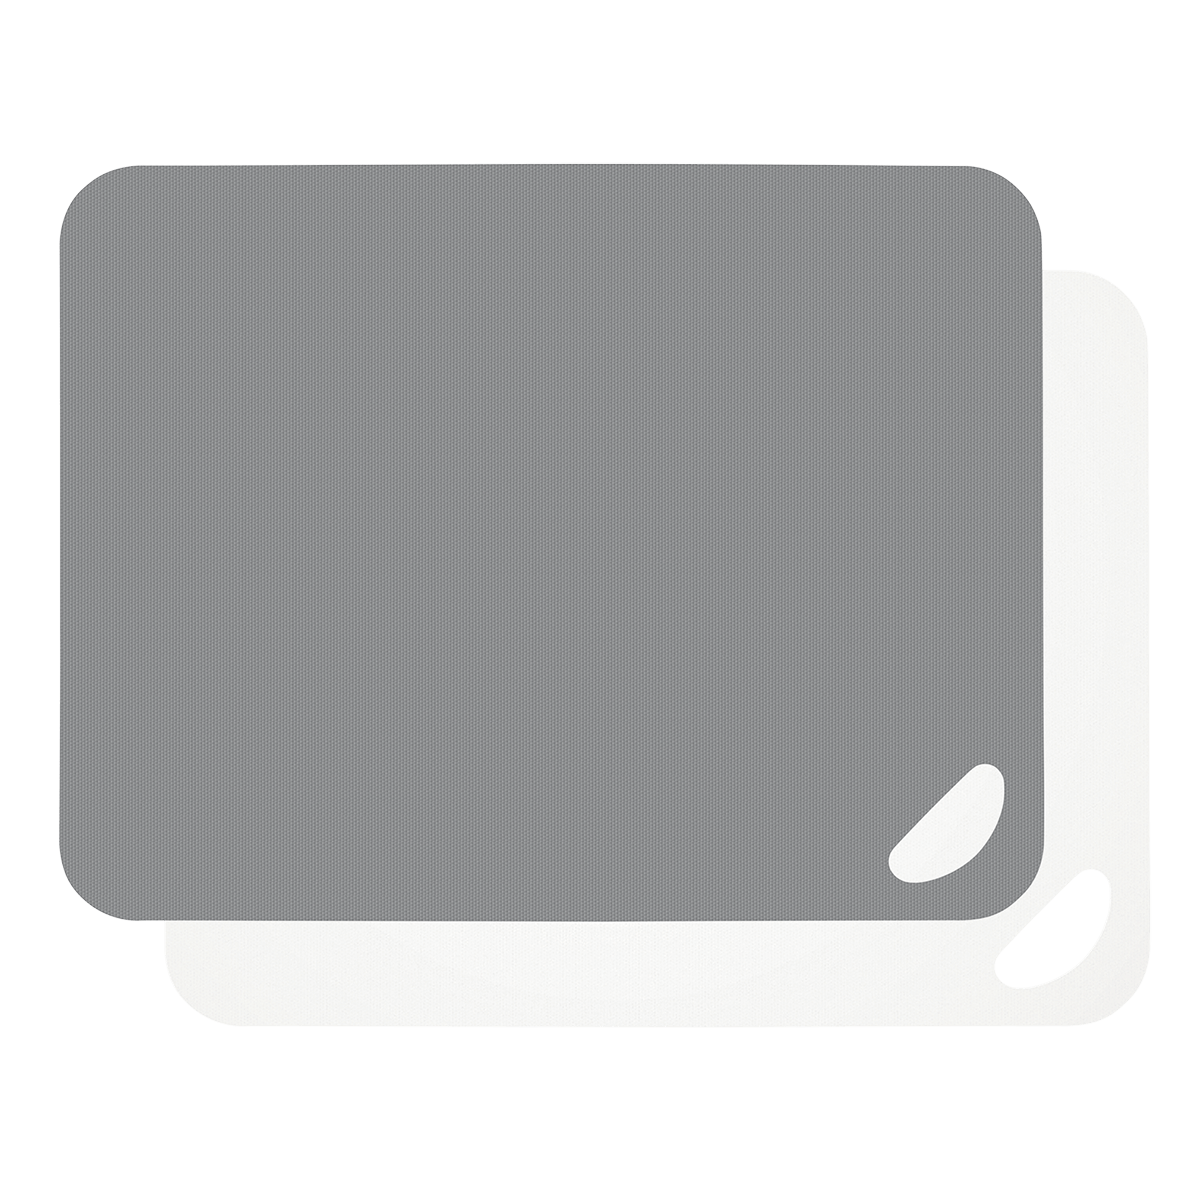 LURCH Schneidbretter Flexi flint 2er Set - grey/weiß Kunststoff flexibel, hygienisch, spülmaschinengeeignet